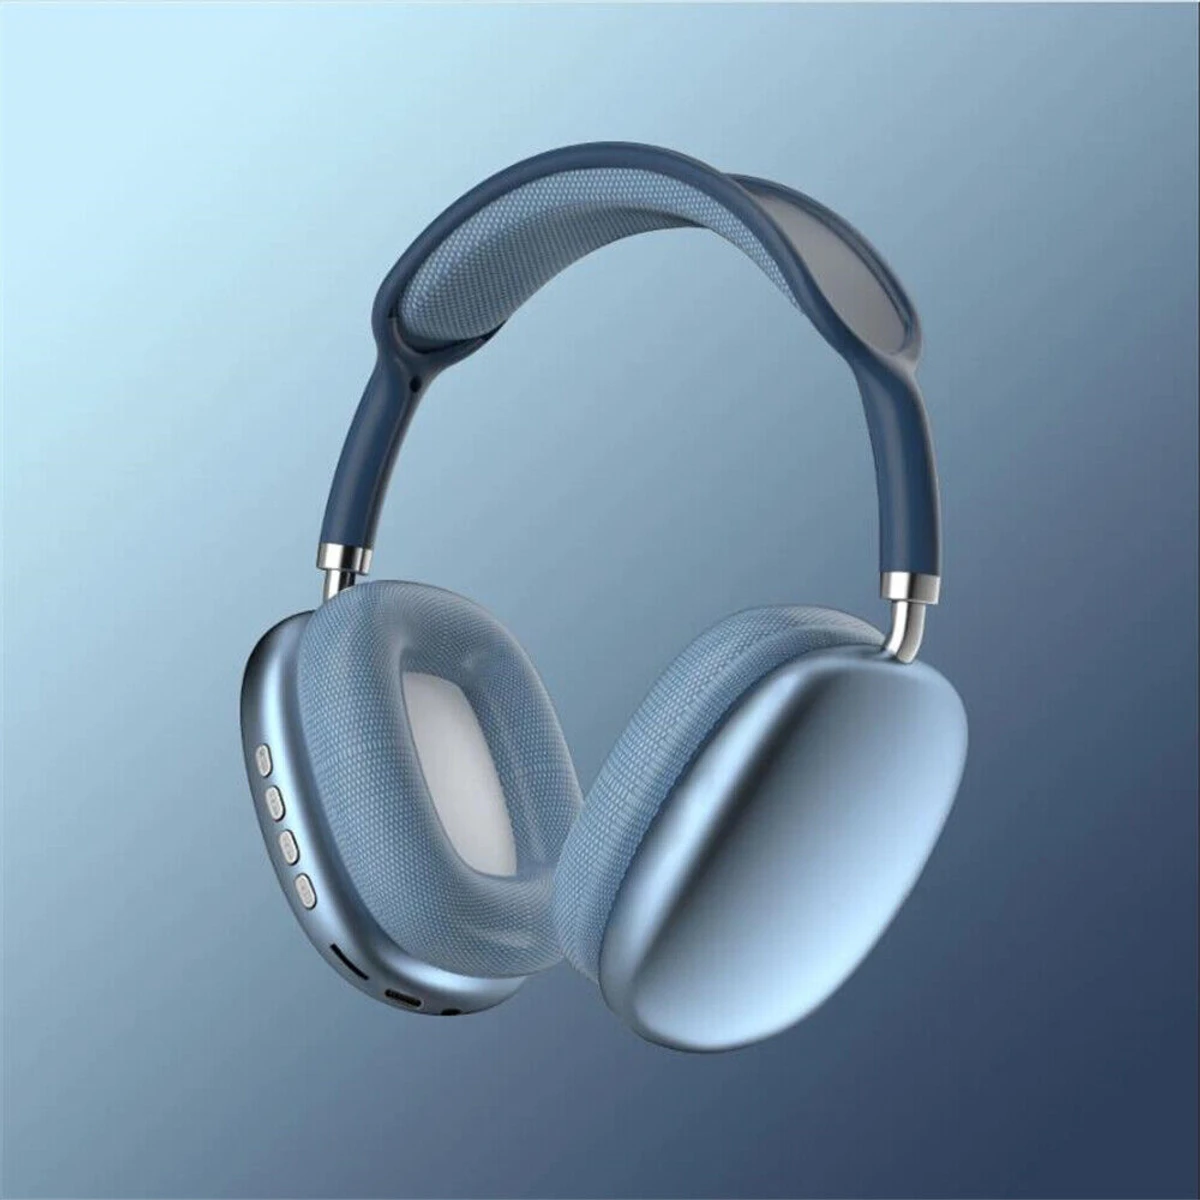 P9 Pro max Wireless Bluetooth Headphones ছবিতে দেয়া কালারগুলো এভেলেবেল আছে ( কোন কালার নোট এ লিখুন )